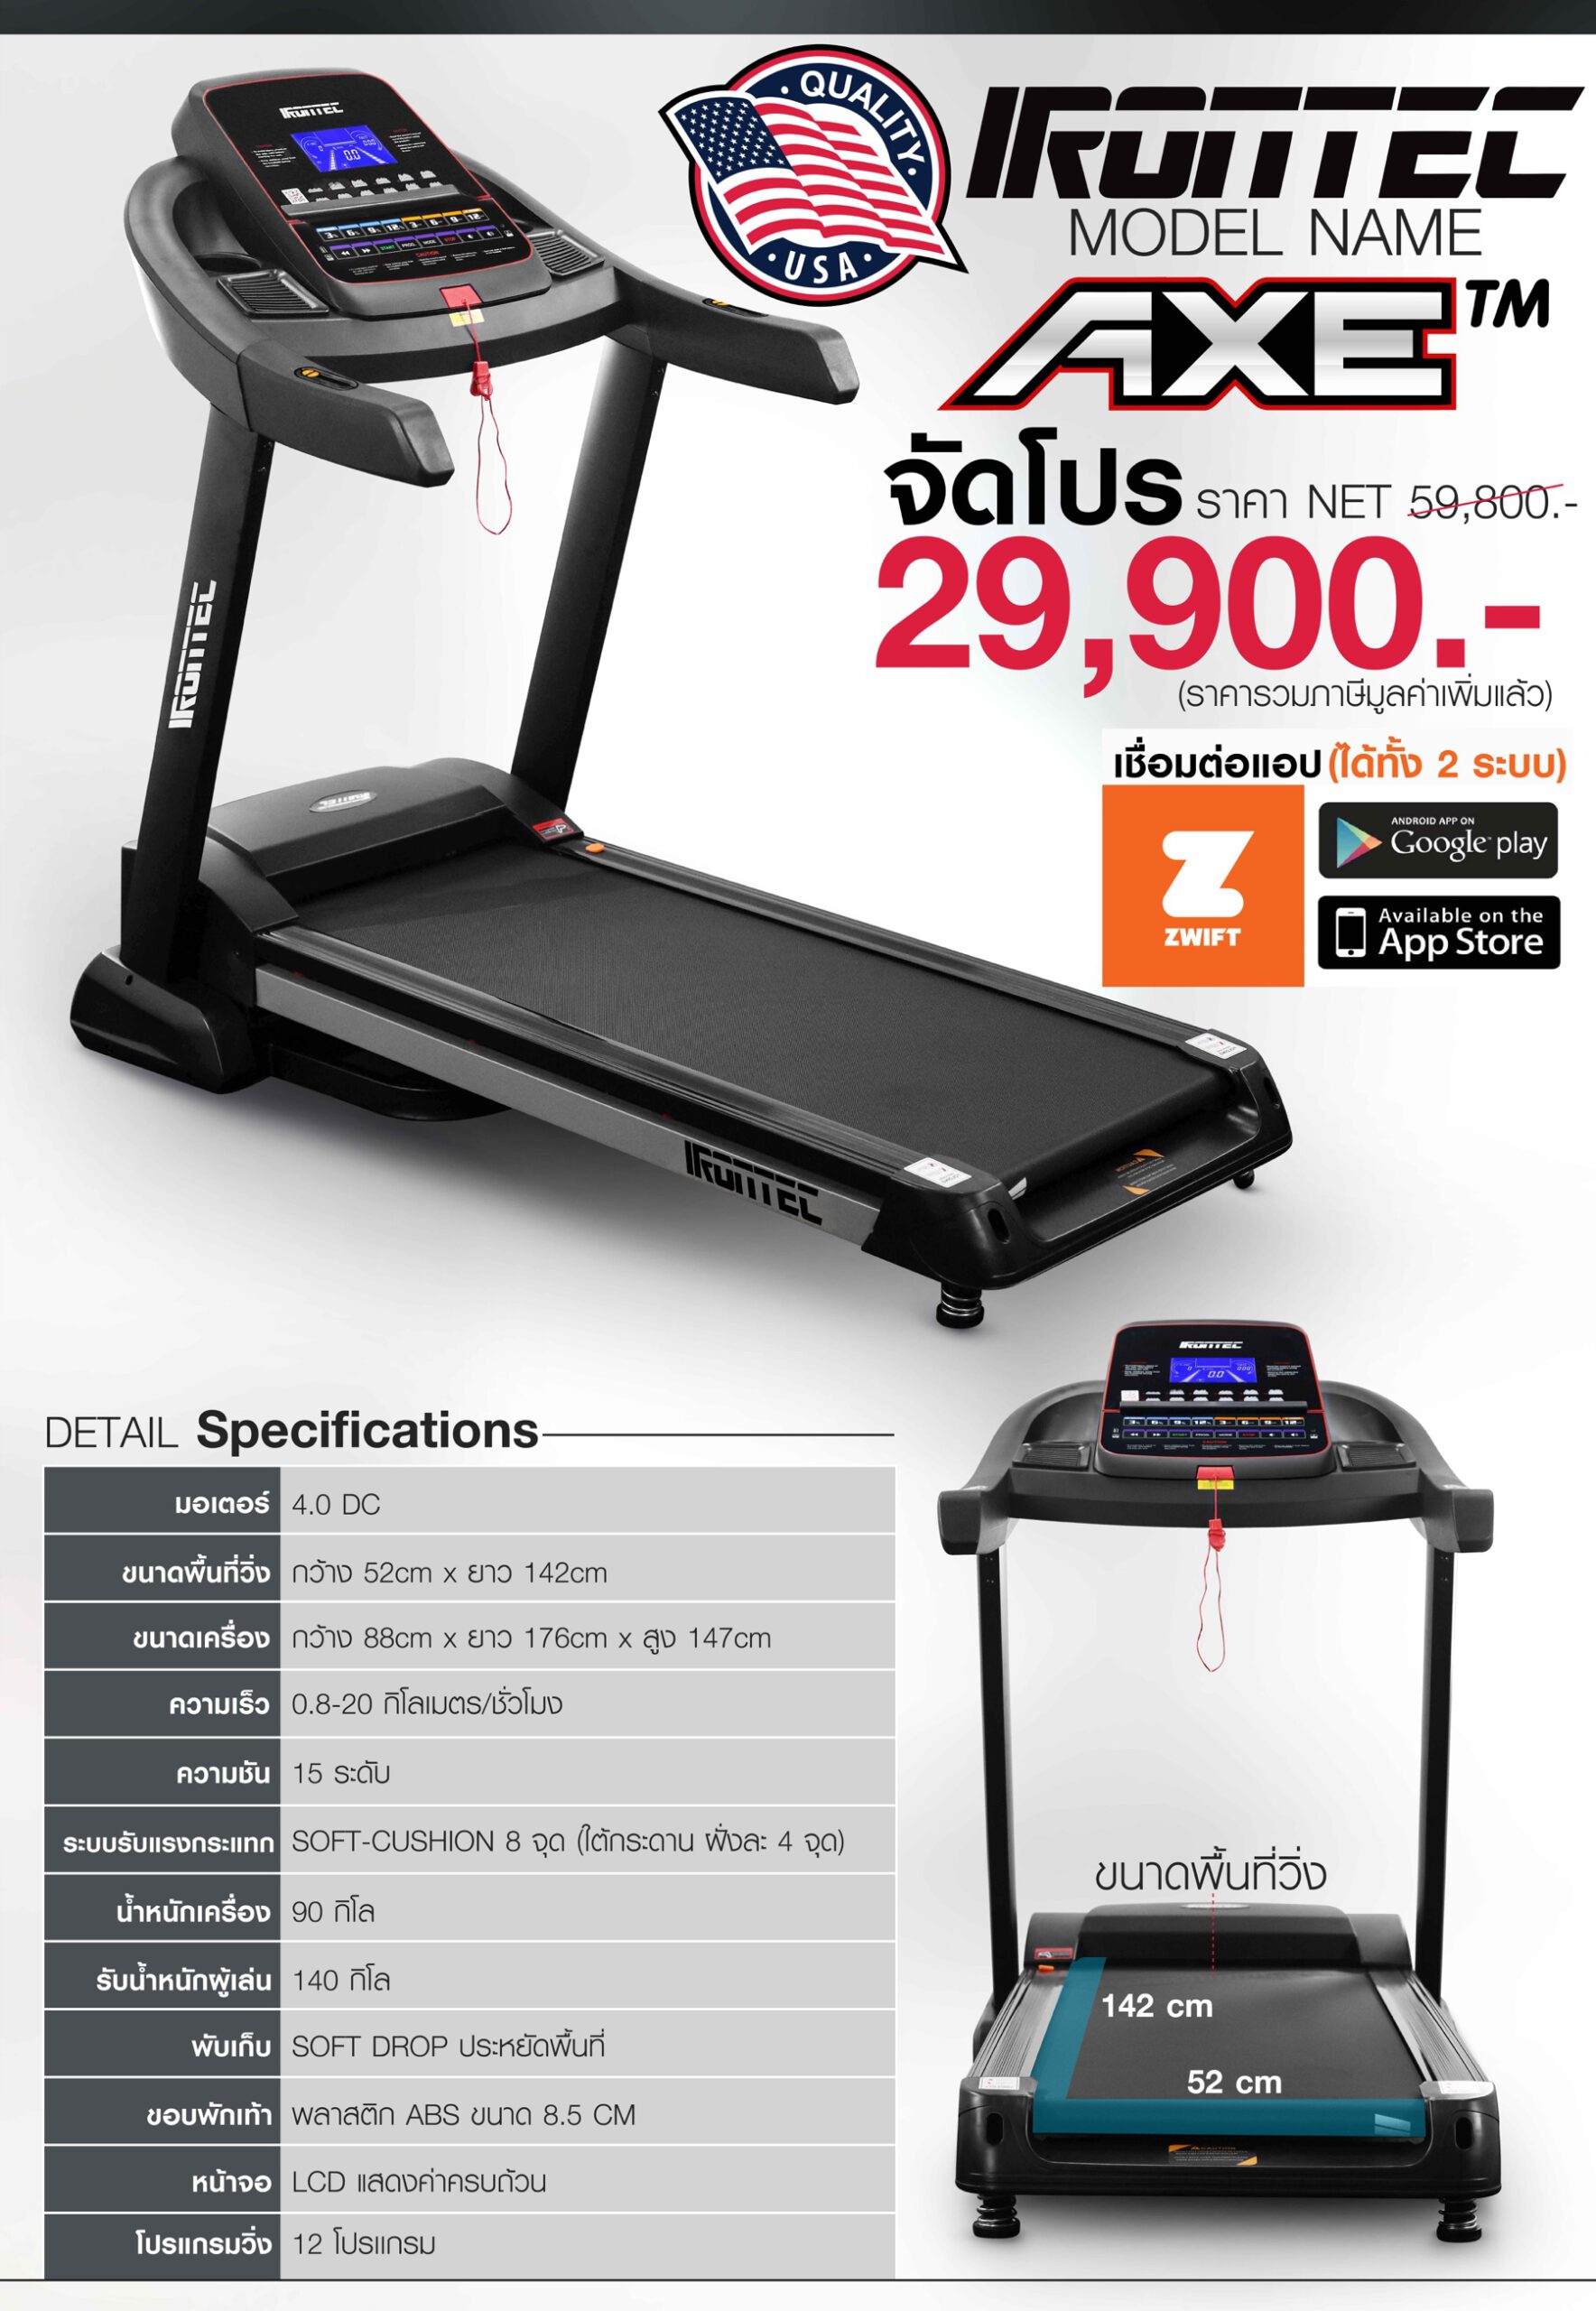 treadmill-axe